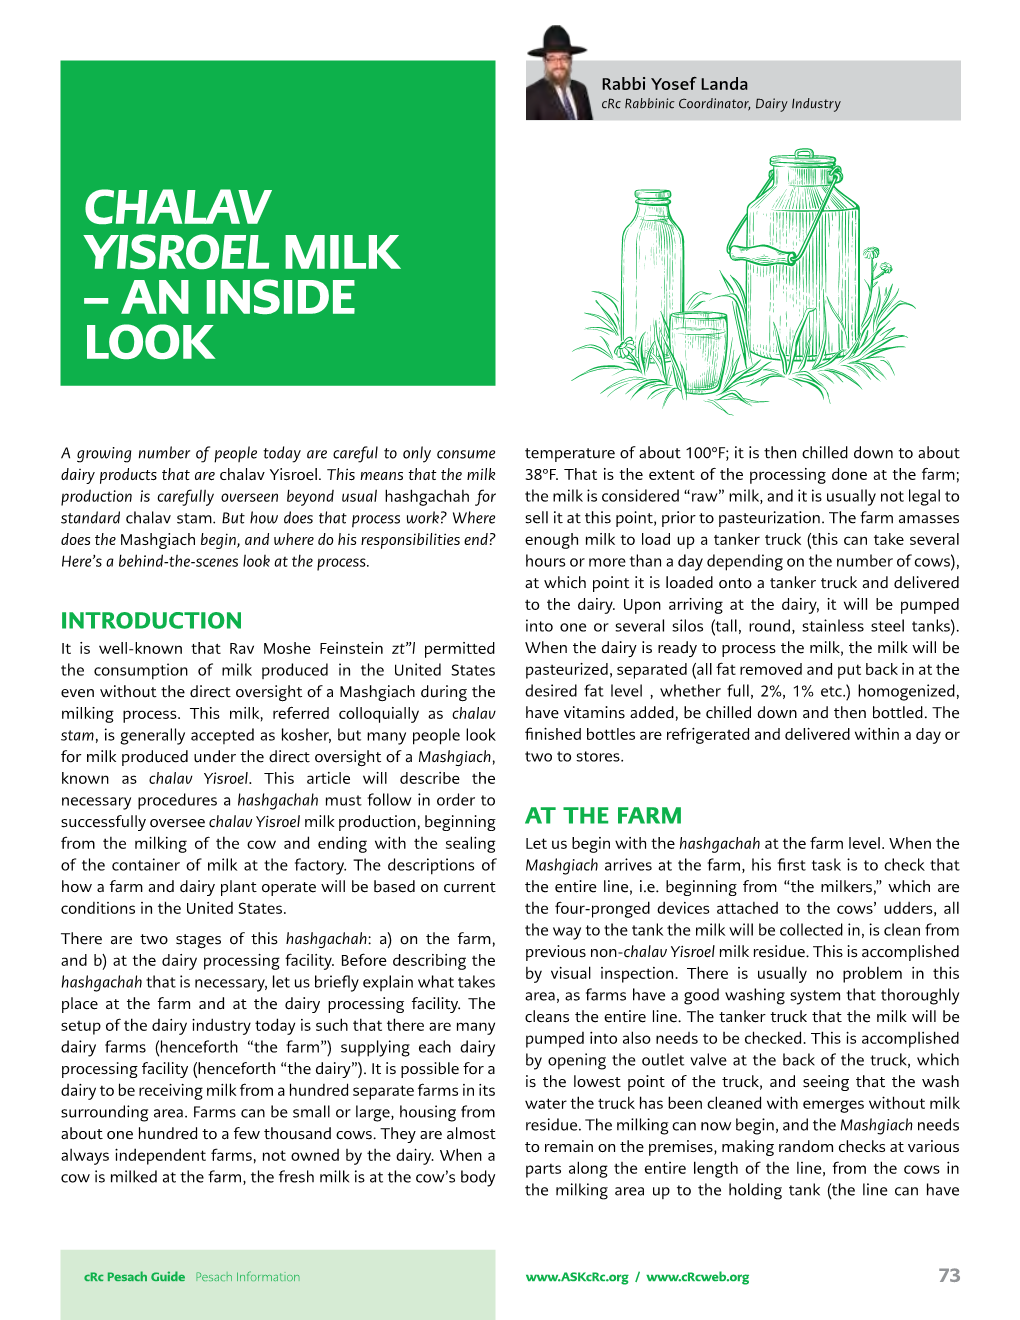 Chalav Yisroel Milk – an Inside Look